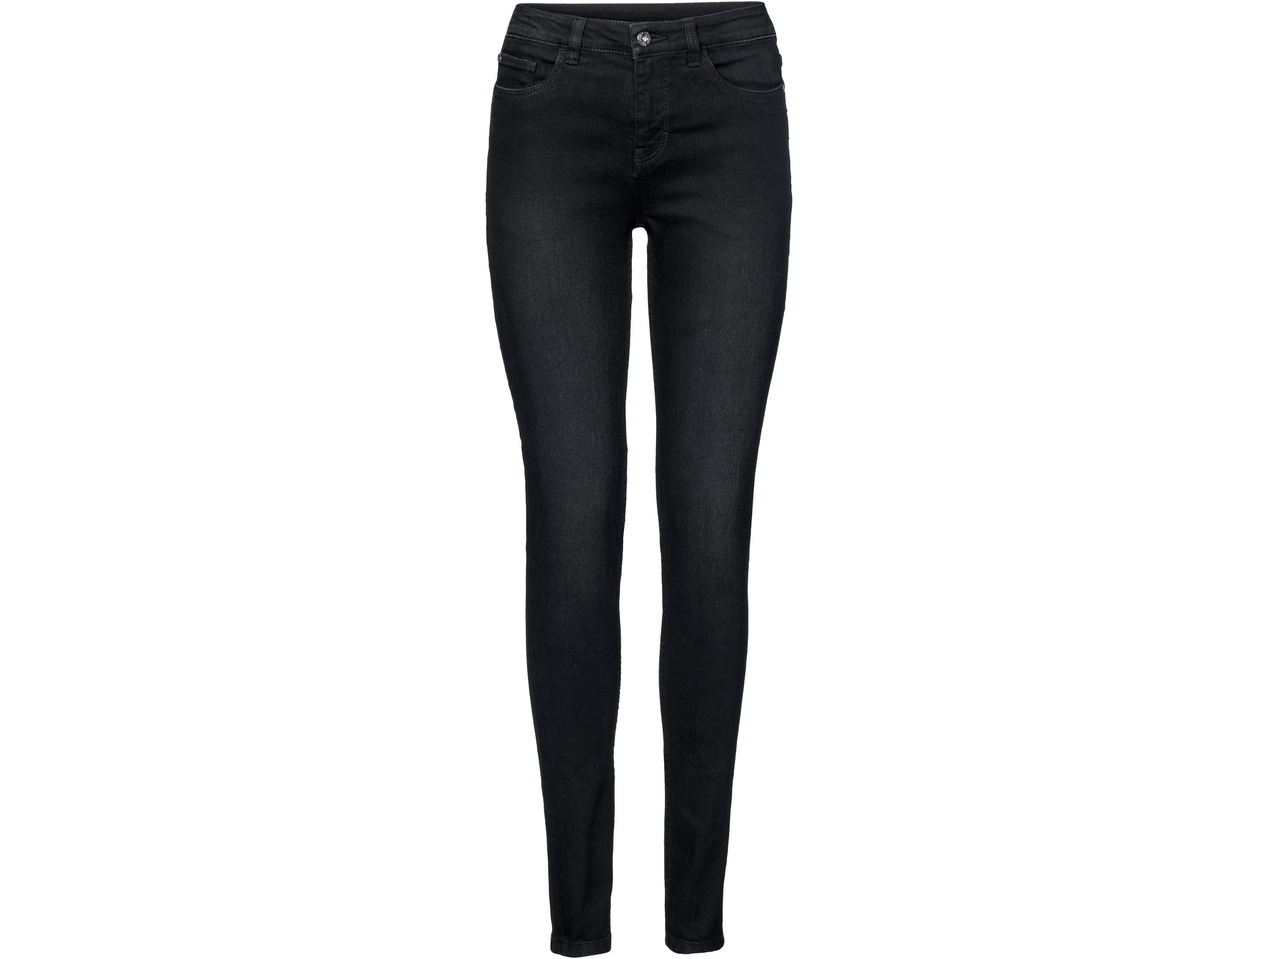 ESMARA Ladies' Skinny Jeans